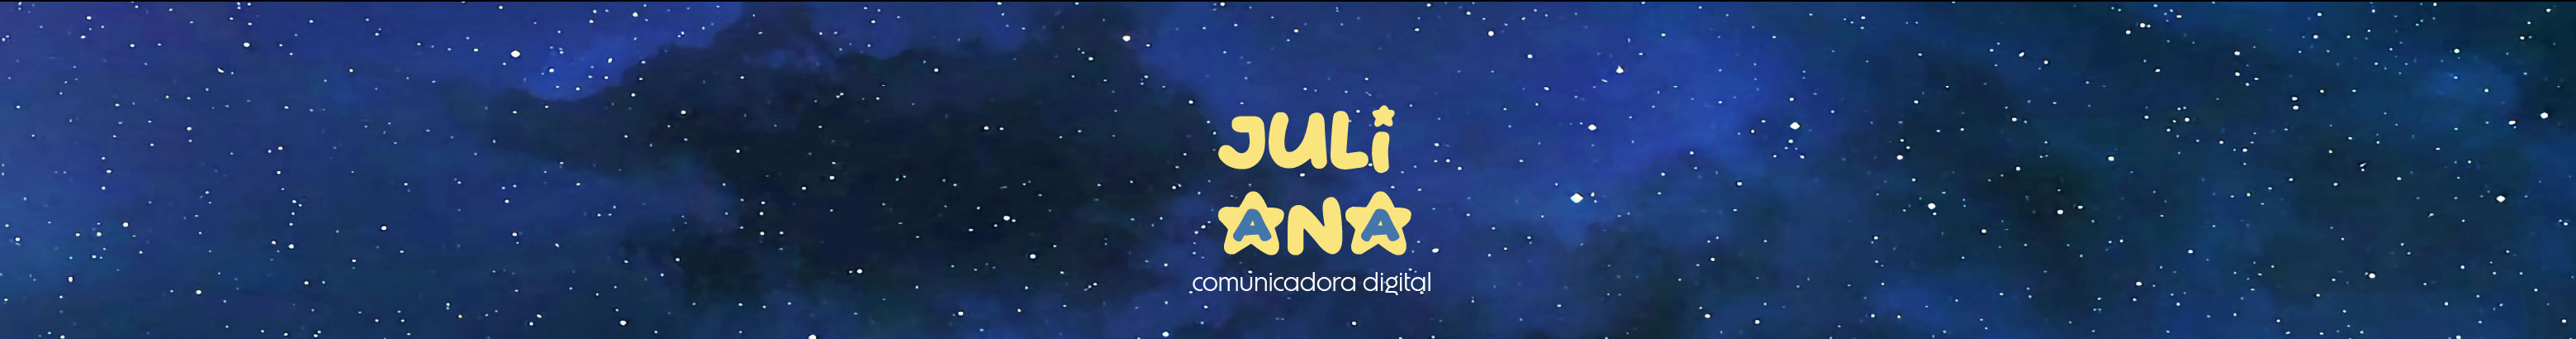 Juliana Giraldo Galeano's profile banner